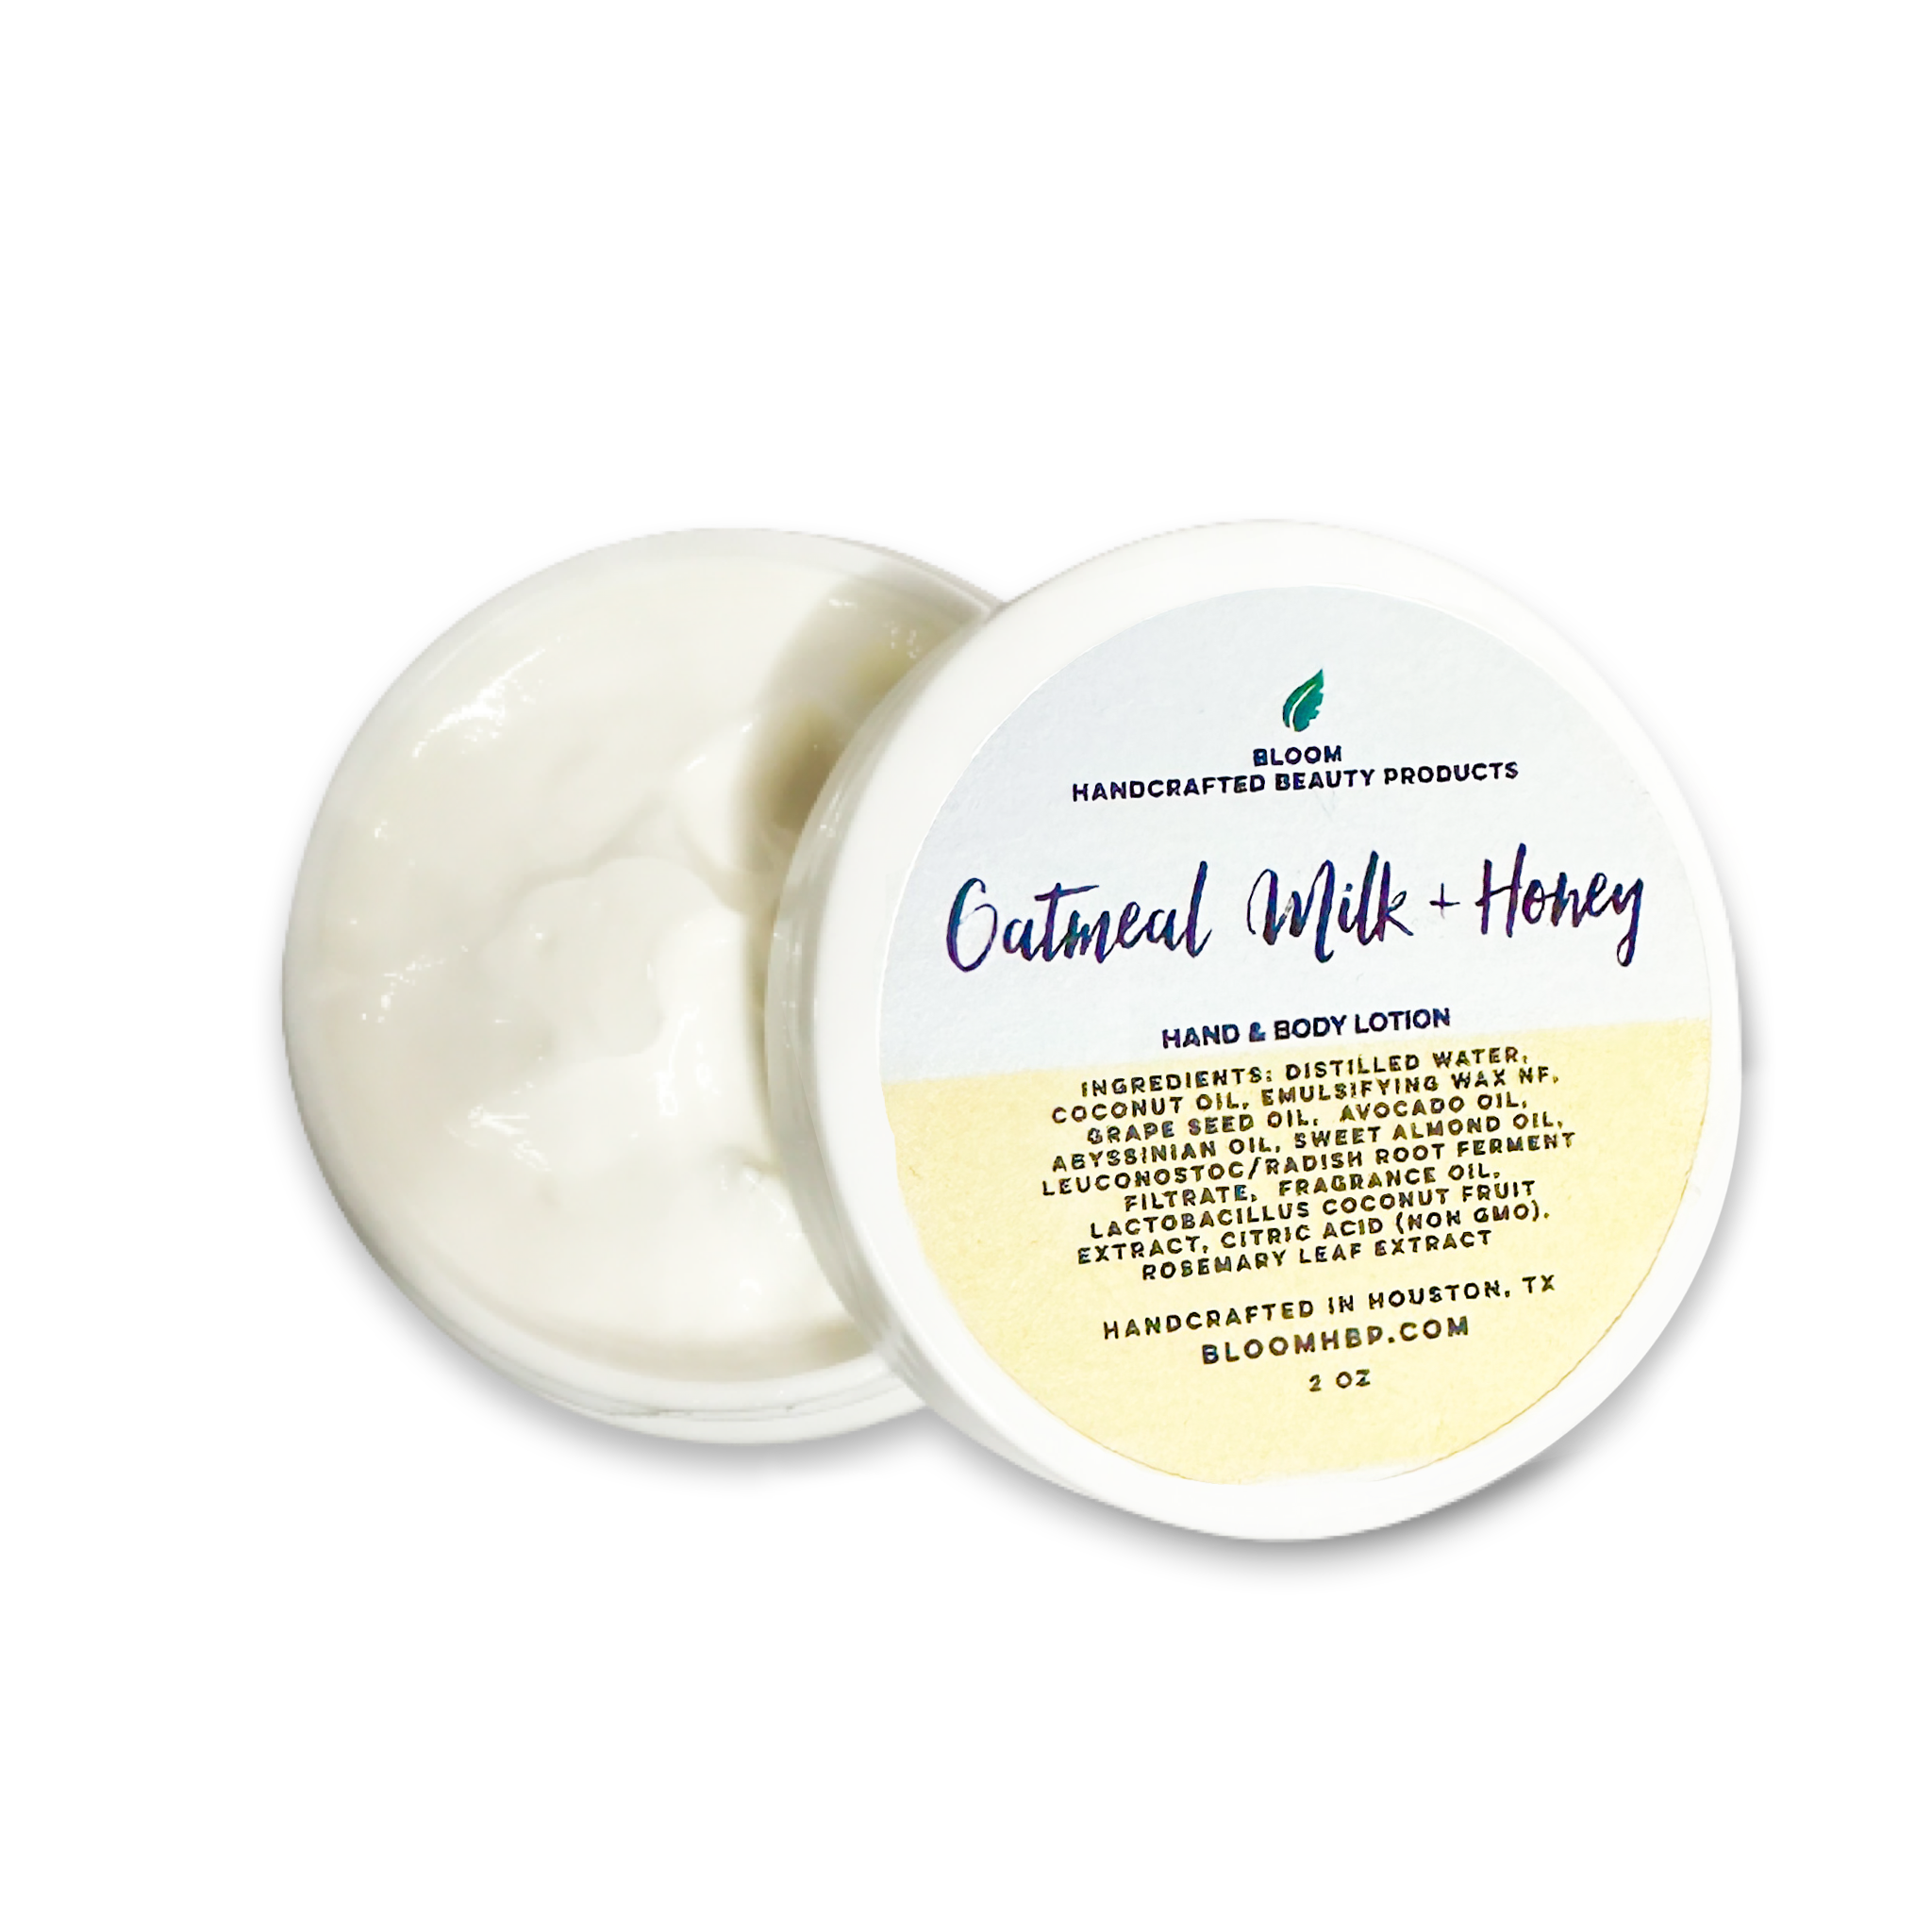 Oatmeal Milk + Honey Hand & Body - Bloom Handcrafted Products | BLOOM Handcrafted Beauty Products